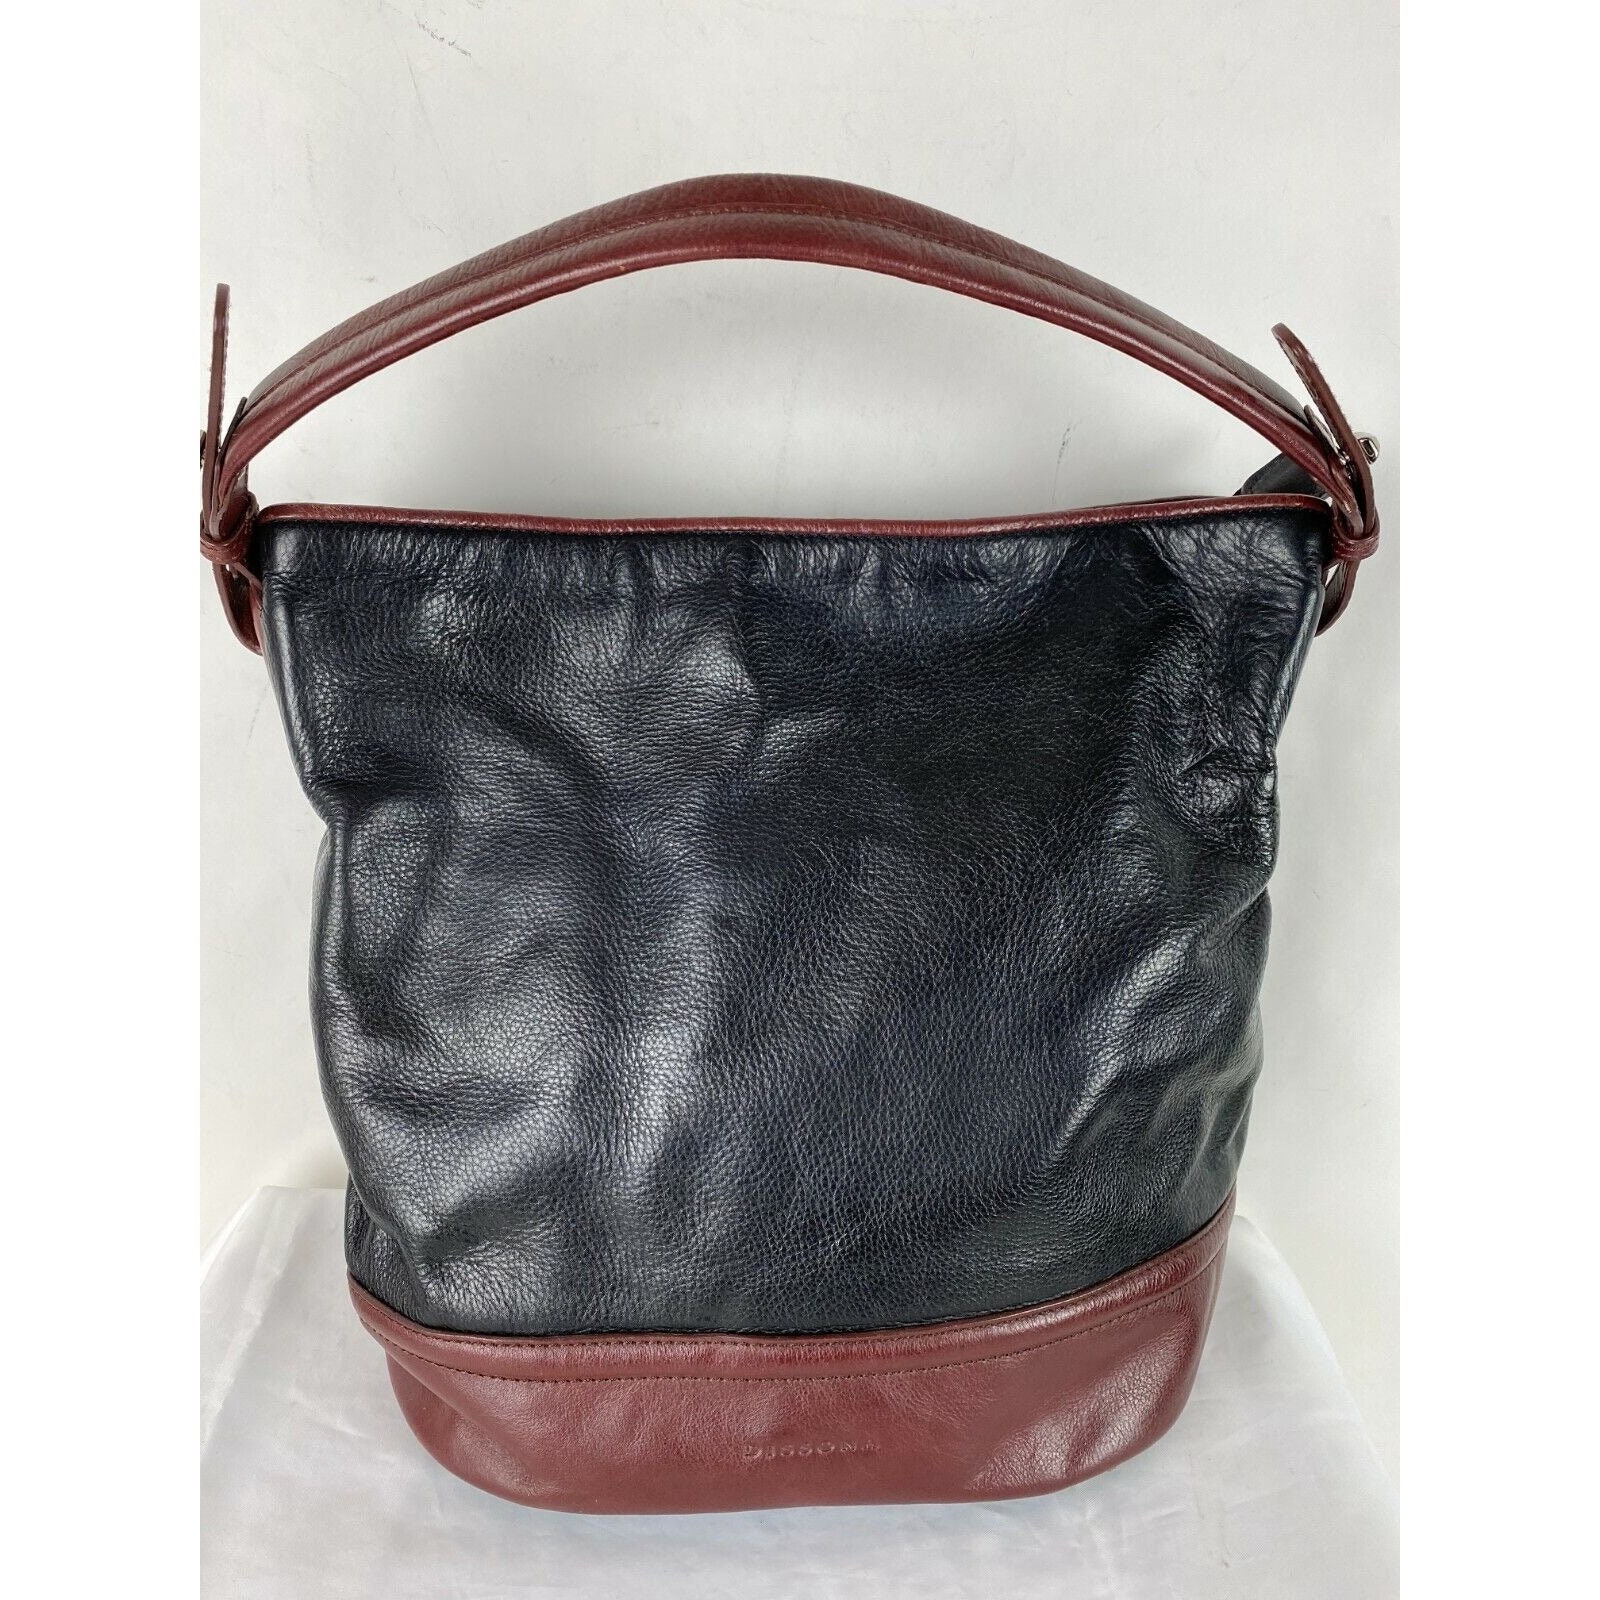 Authentic Dissona Leather 2-Way Bag